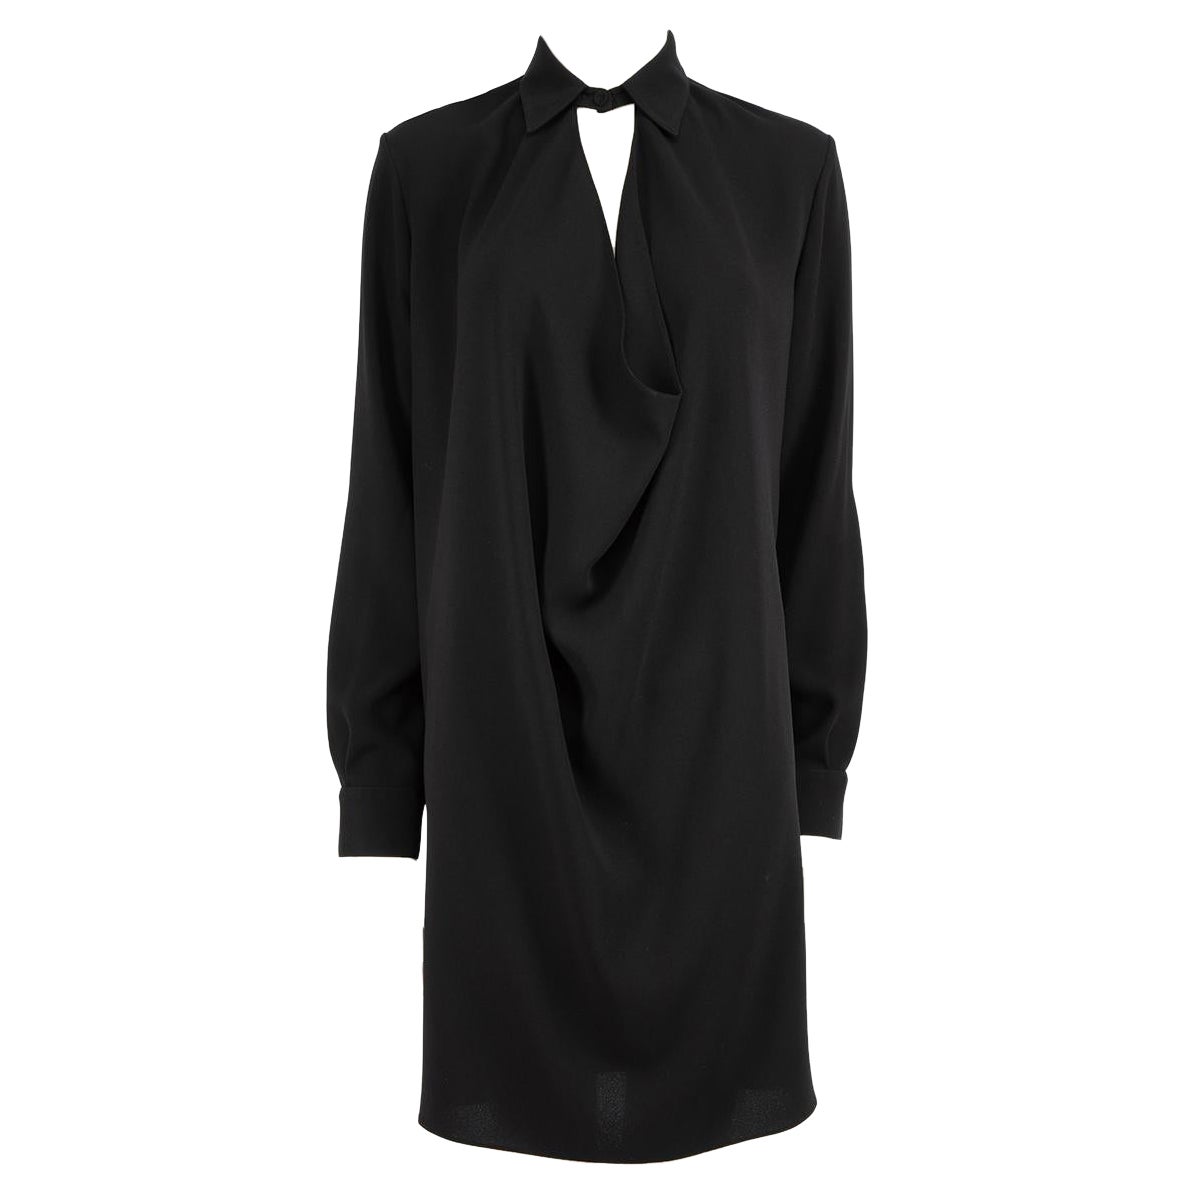 Balenciaga Black Cowl Neck Long Sleeve Dress Size S For Sale